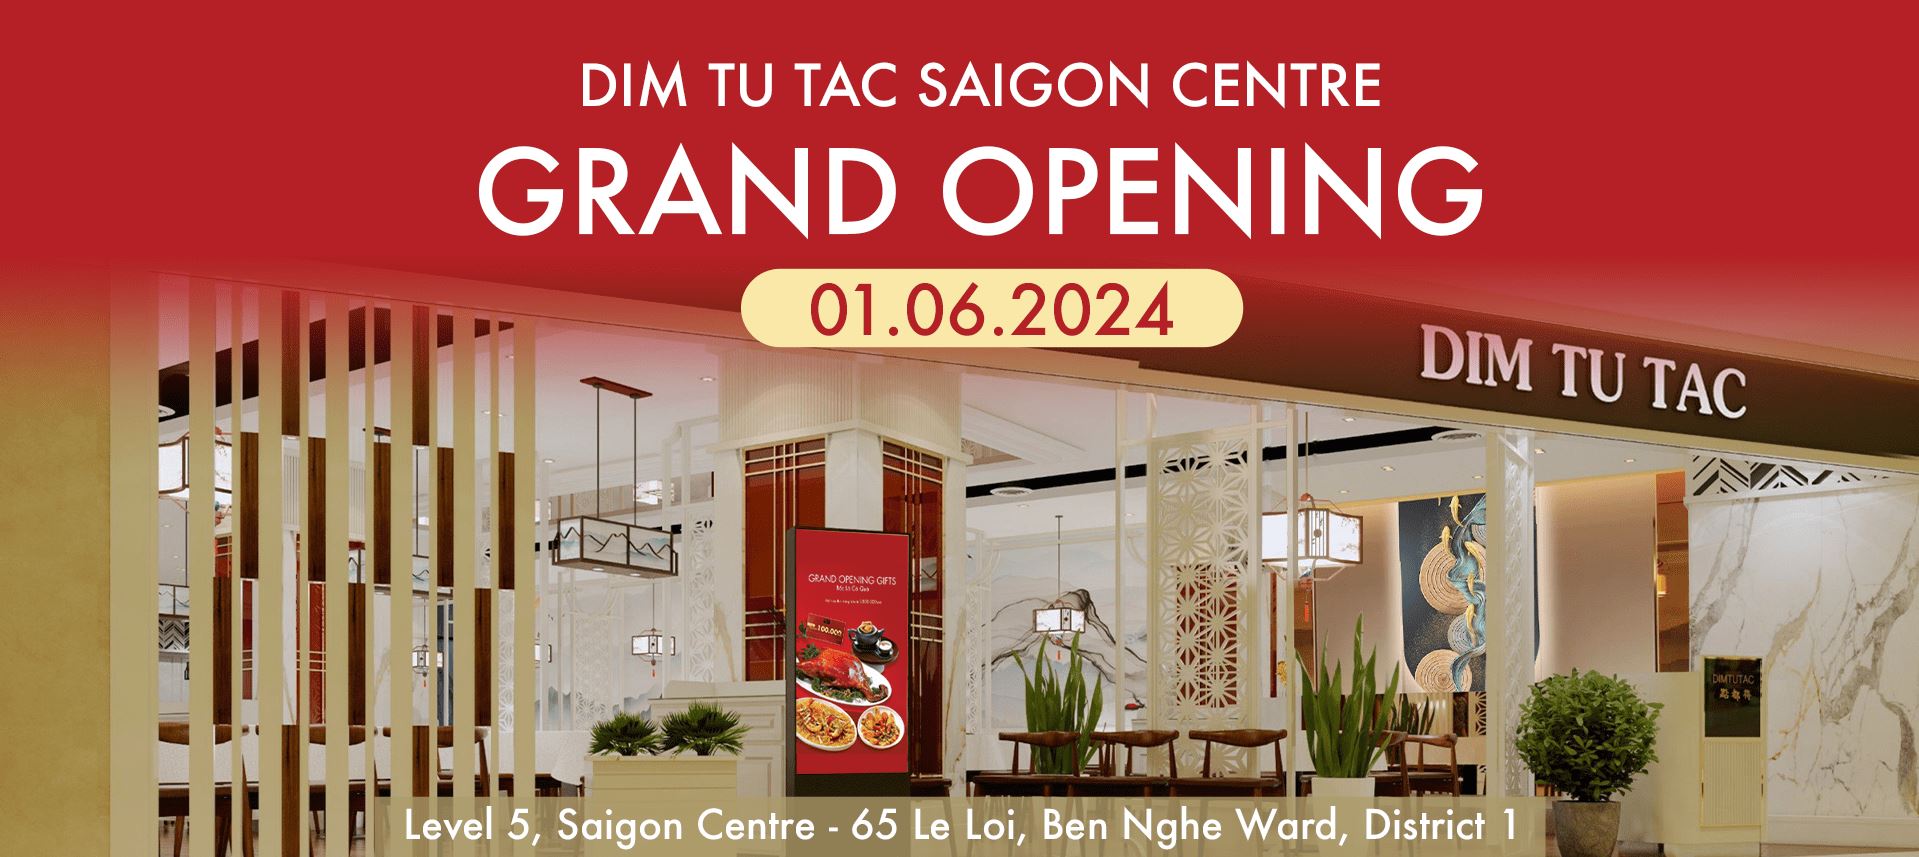 DIM TU TAC SAIGON CENTRE GRAND OPENING WEEK